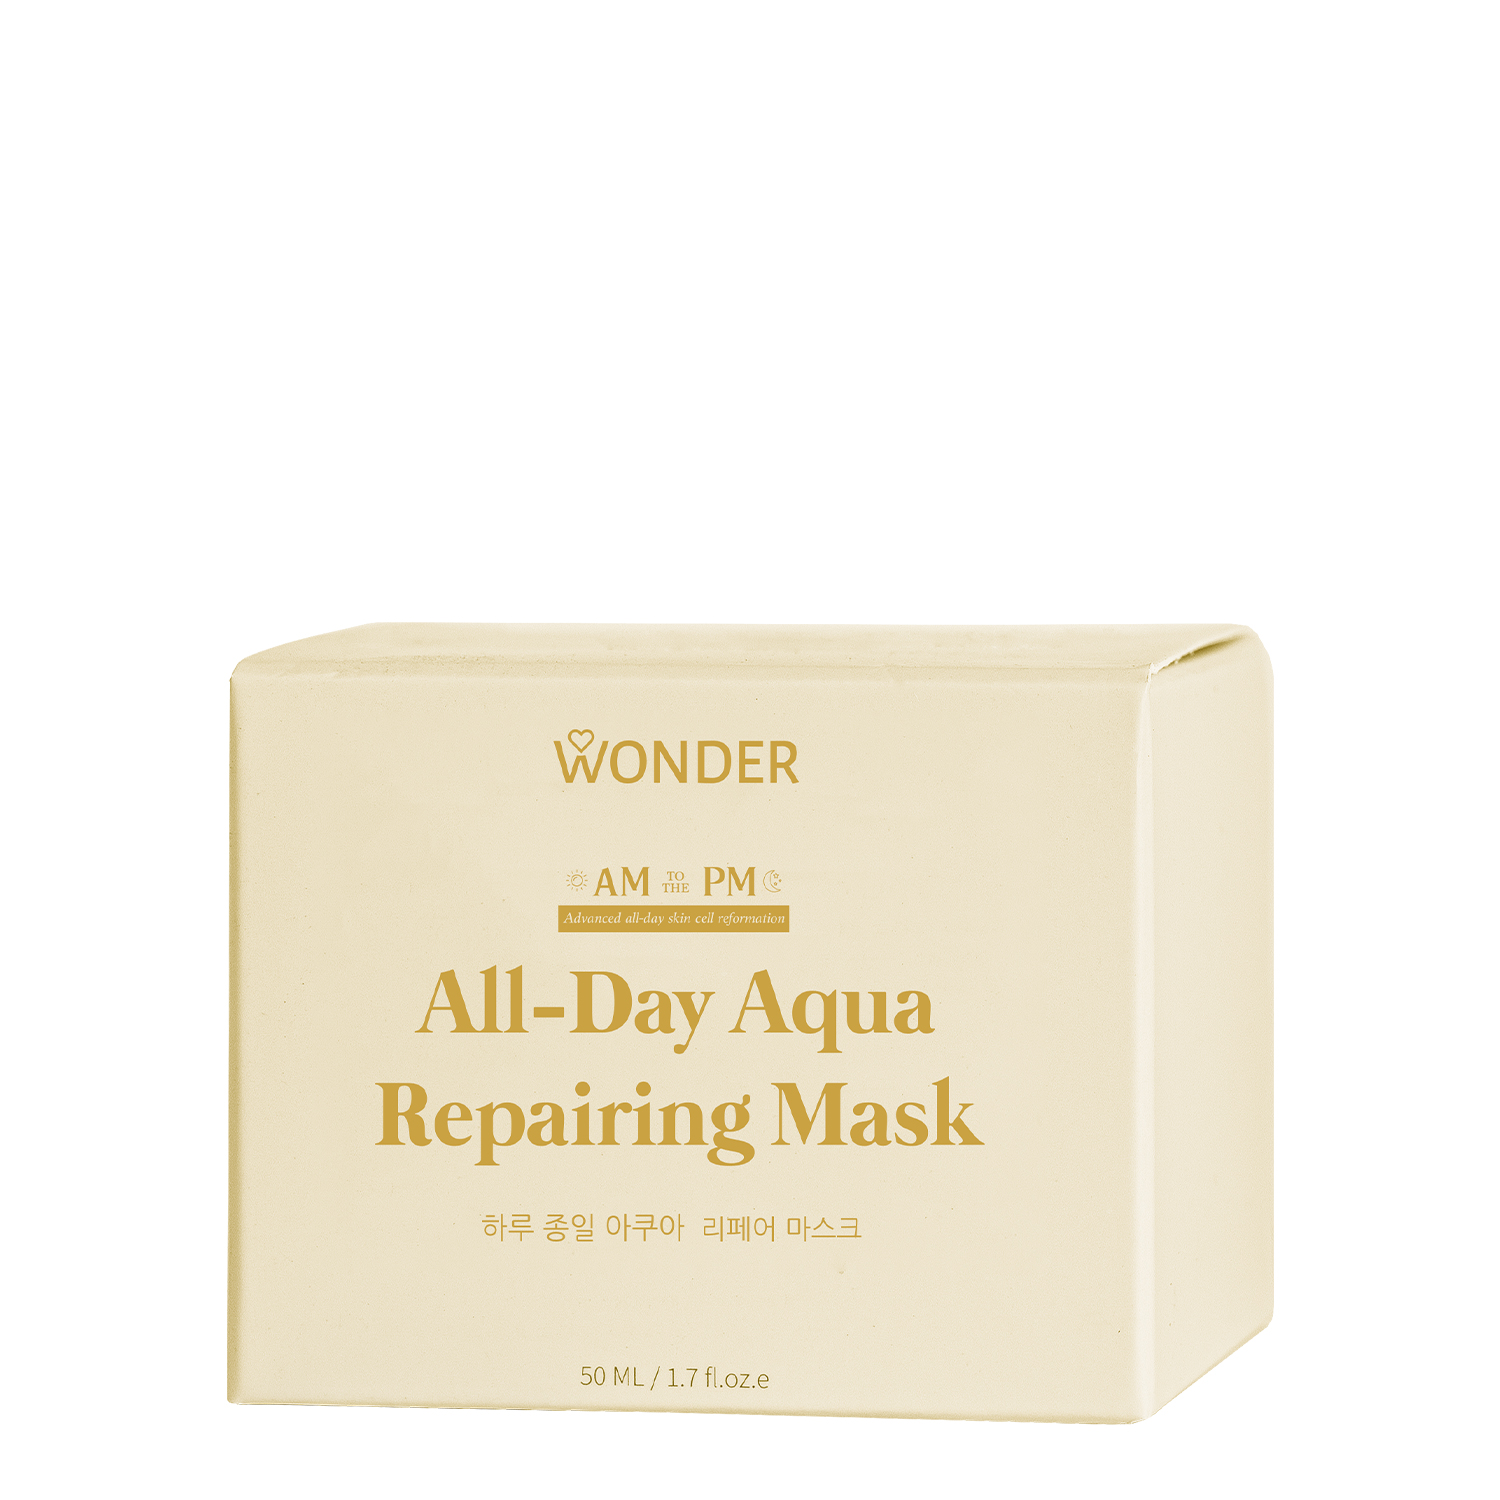 all-day-aqua-repairing-mask